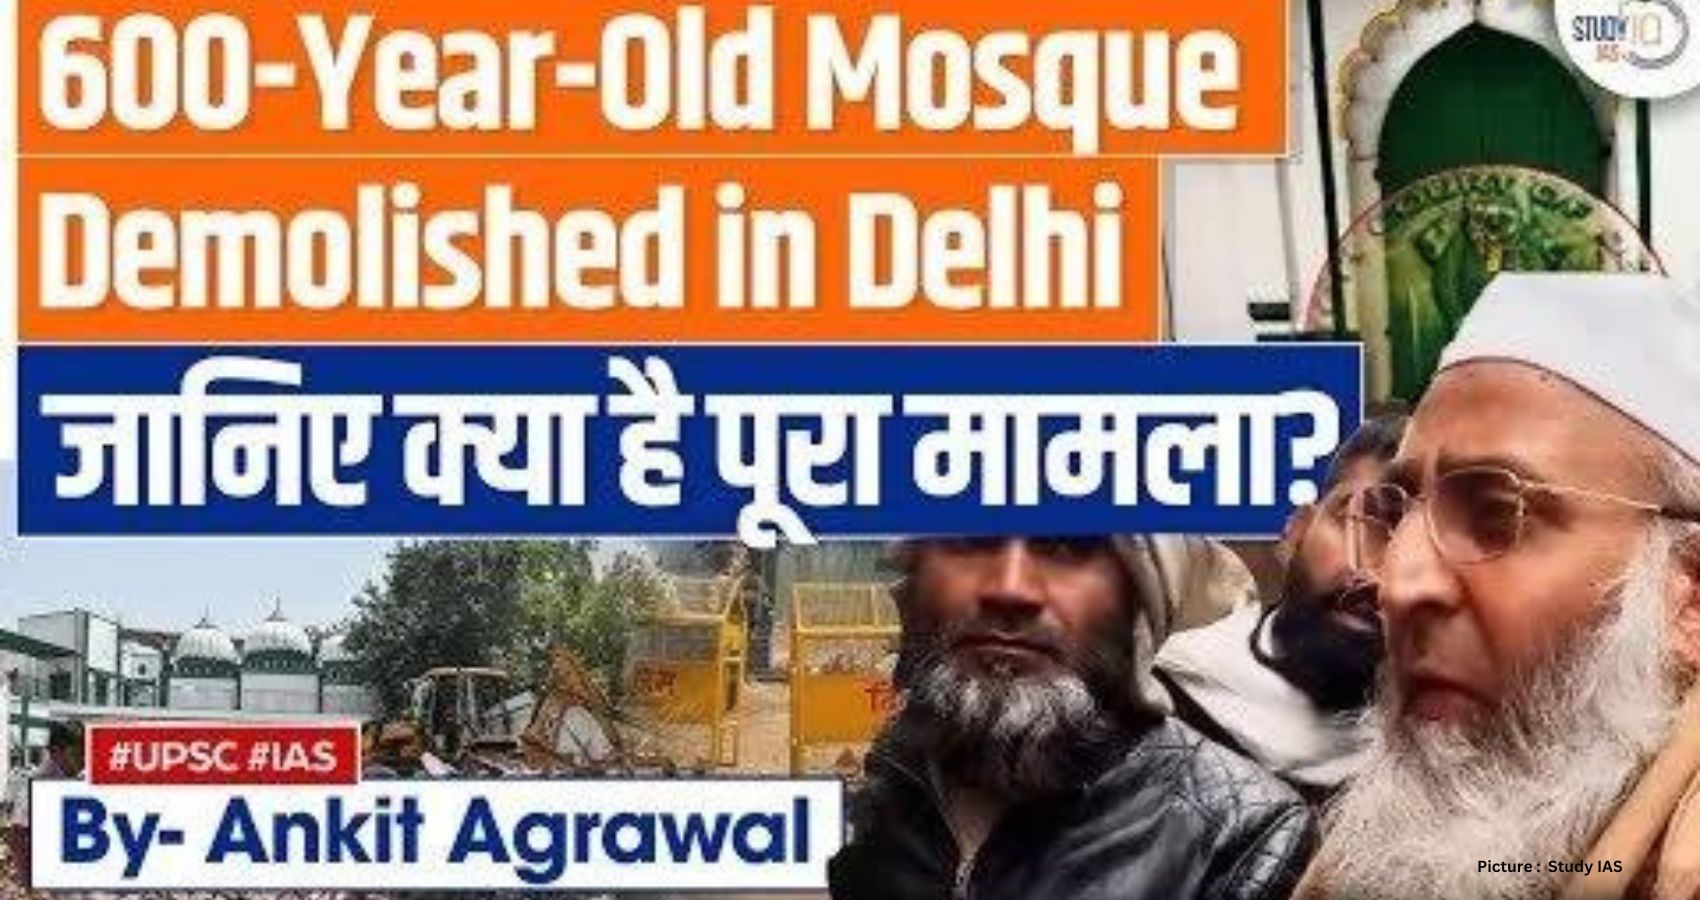 IAMC Condemns Demolition of 600-Year-Old Mosque in Delhi